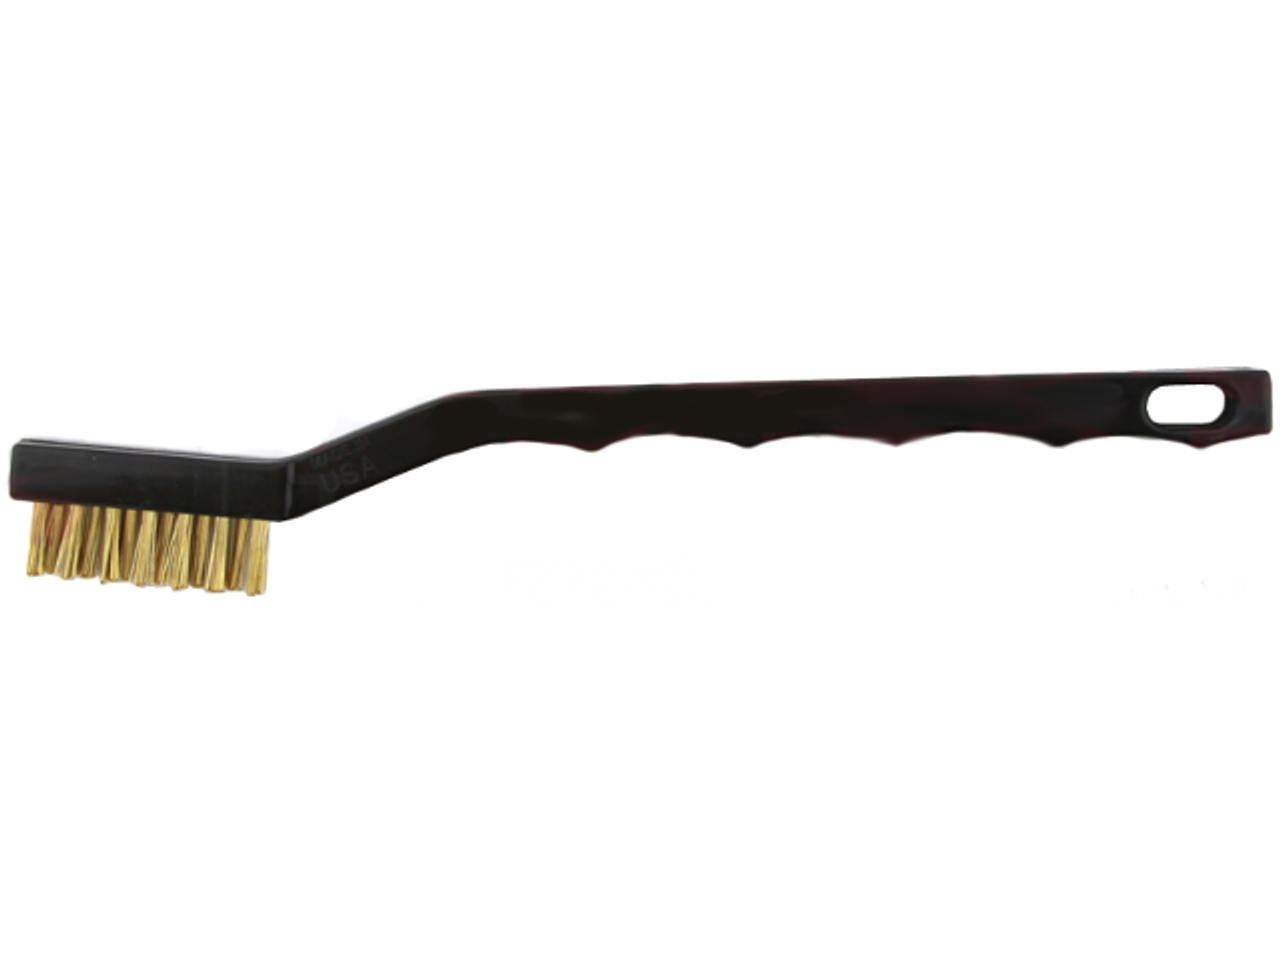 Justman 750480 Small Brass Utility Brush, Toothbrush Style - B7975